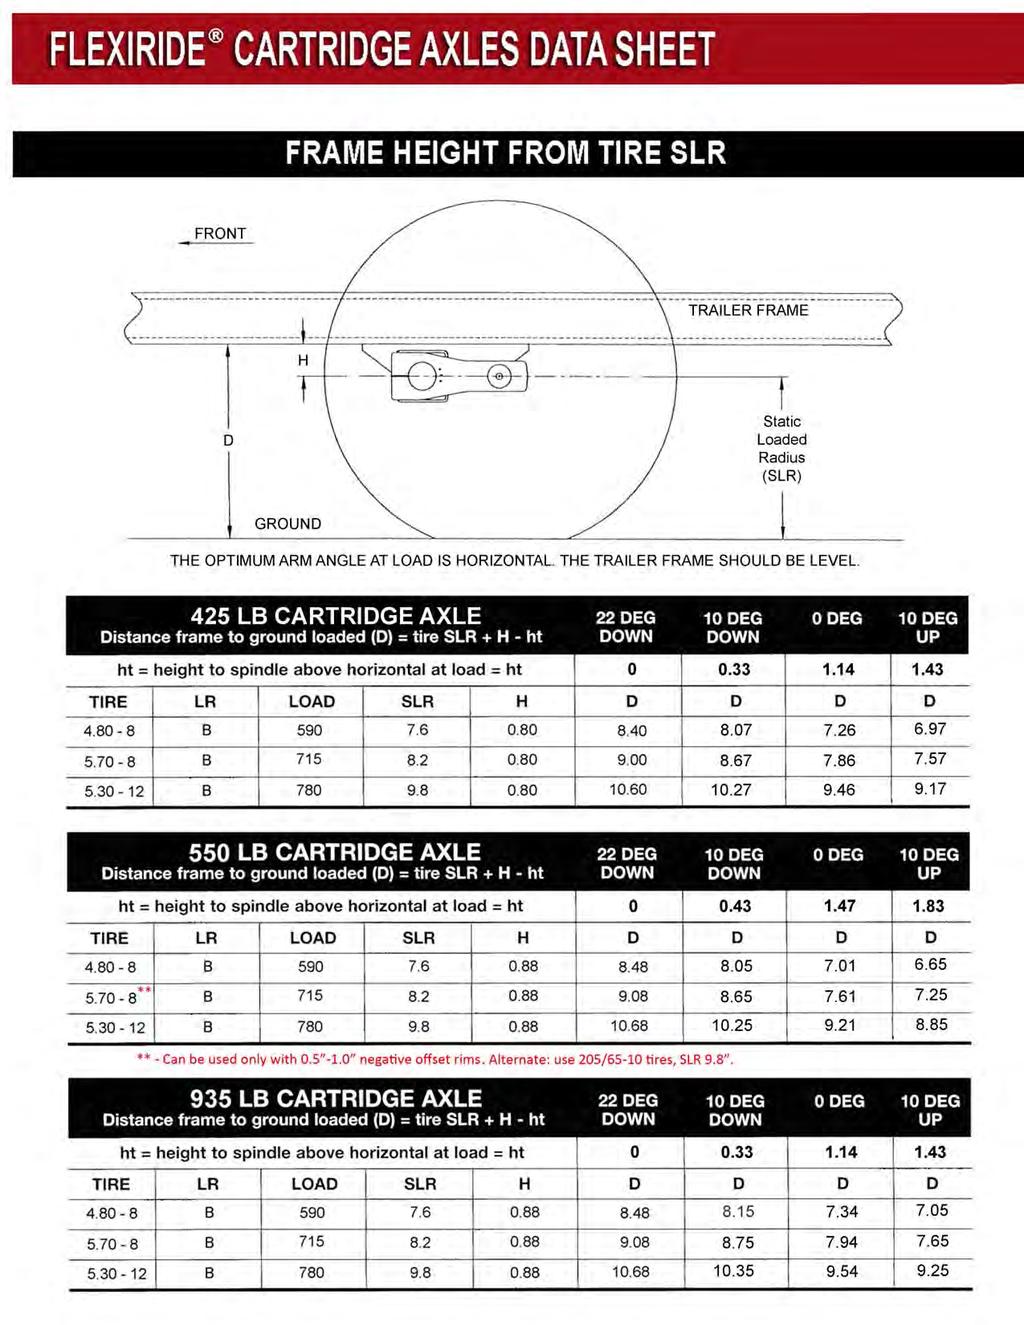 Universal Group FLEXIRIDE Cartridge Axles Data Sheet Frame Height From Tire SLR 425 LB CARTRIDGE AXLE 0 DEG. 0 0.33 1.14 1.43 4.80-8 B 590 7.6 0.80 8.40 8.07 7.26 6.97 5.70-8 B 715 8.2 0.80 9.00 8.